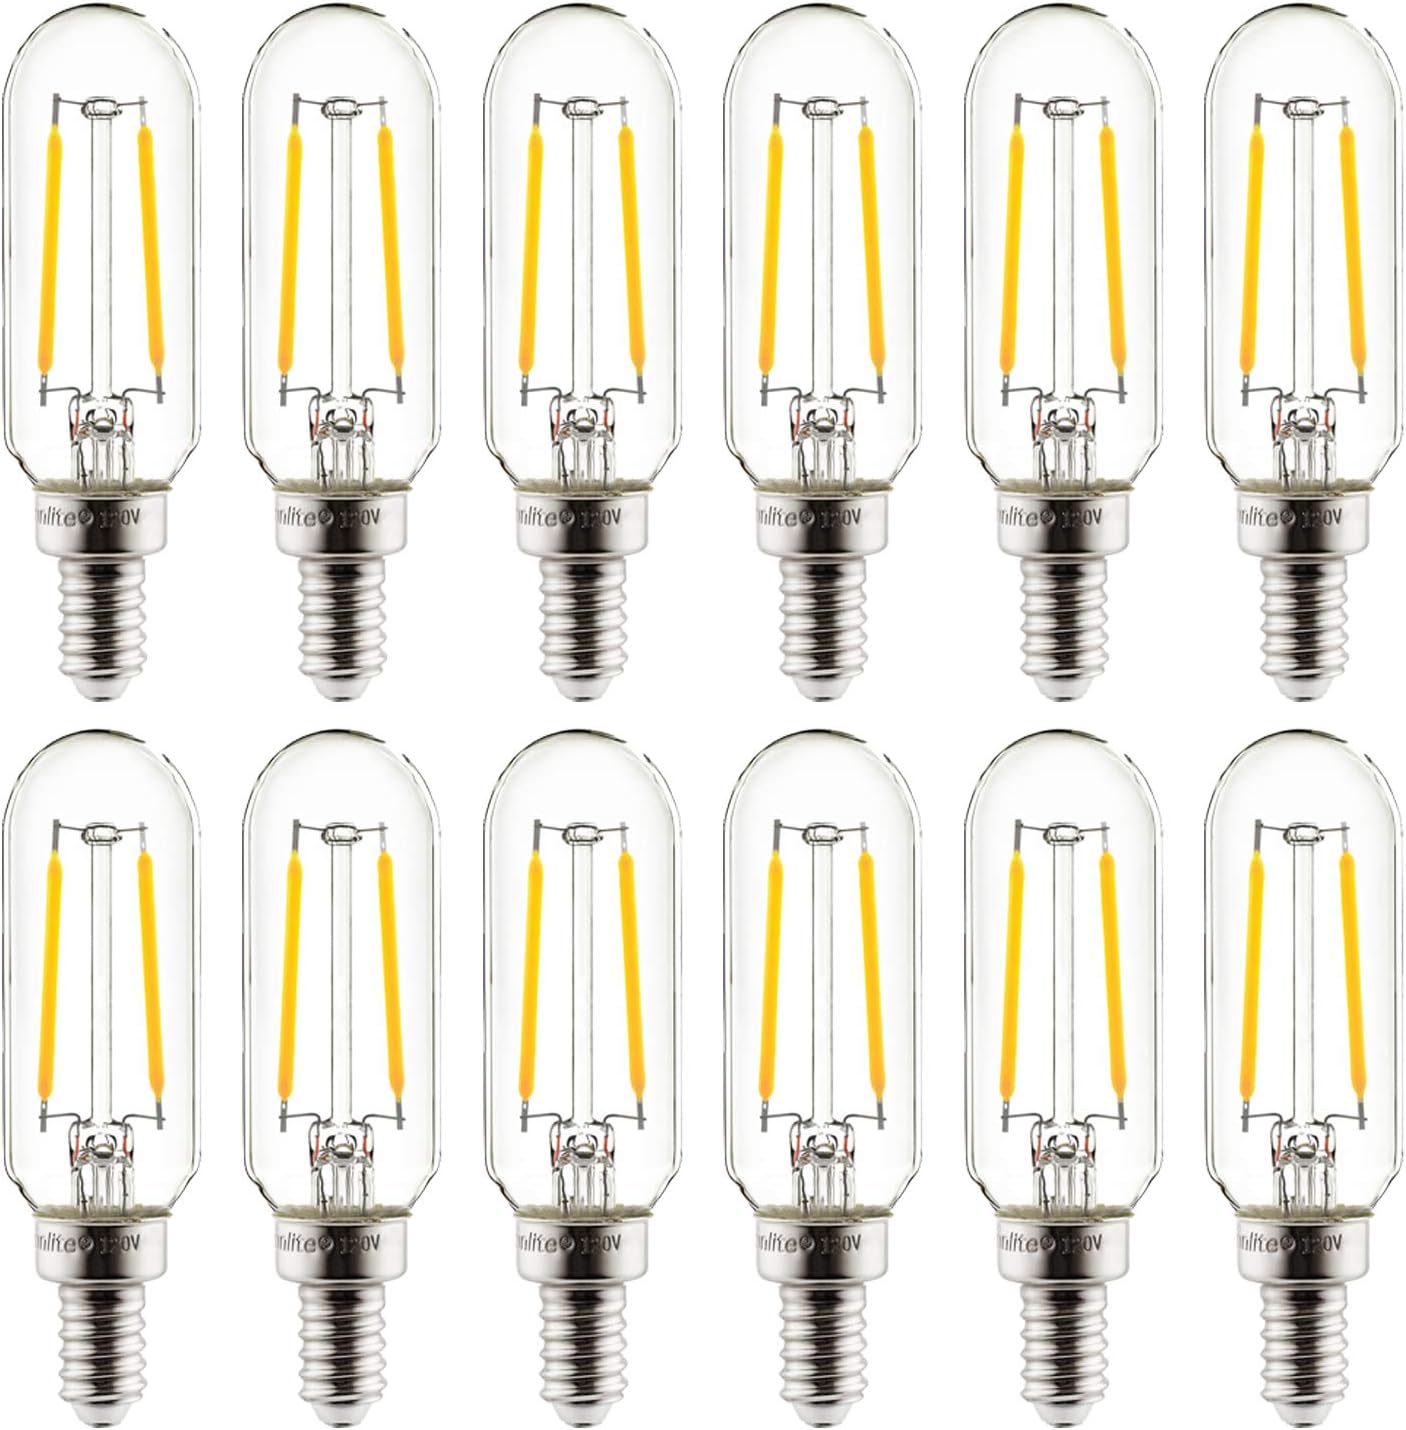 Sunlite 41343 LED Filament T8 Tubular Light Bulb, 2 Watts (25W Equivalent), 120 Lumens, Candelabra E12 Base, Dimmable, 85 mm, UL Listed, 2200K Amber, 12 Pack